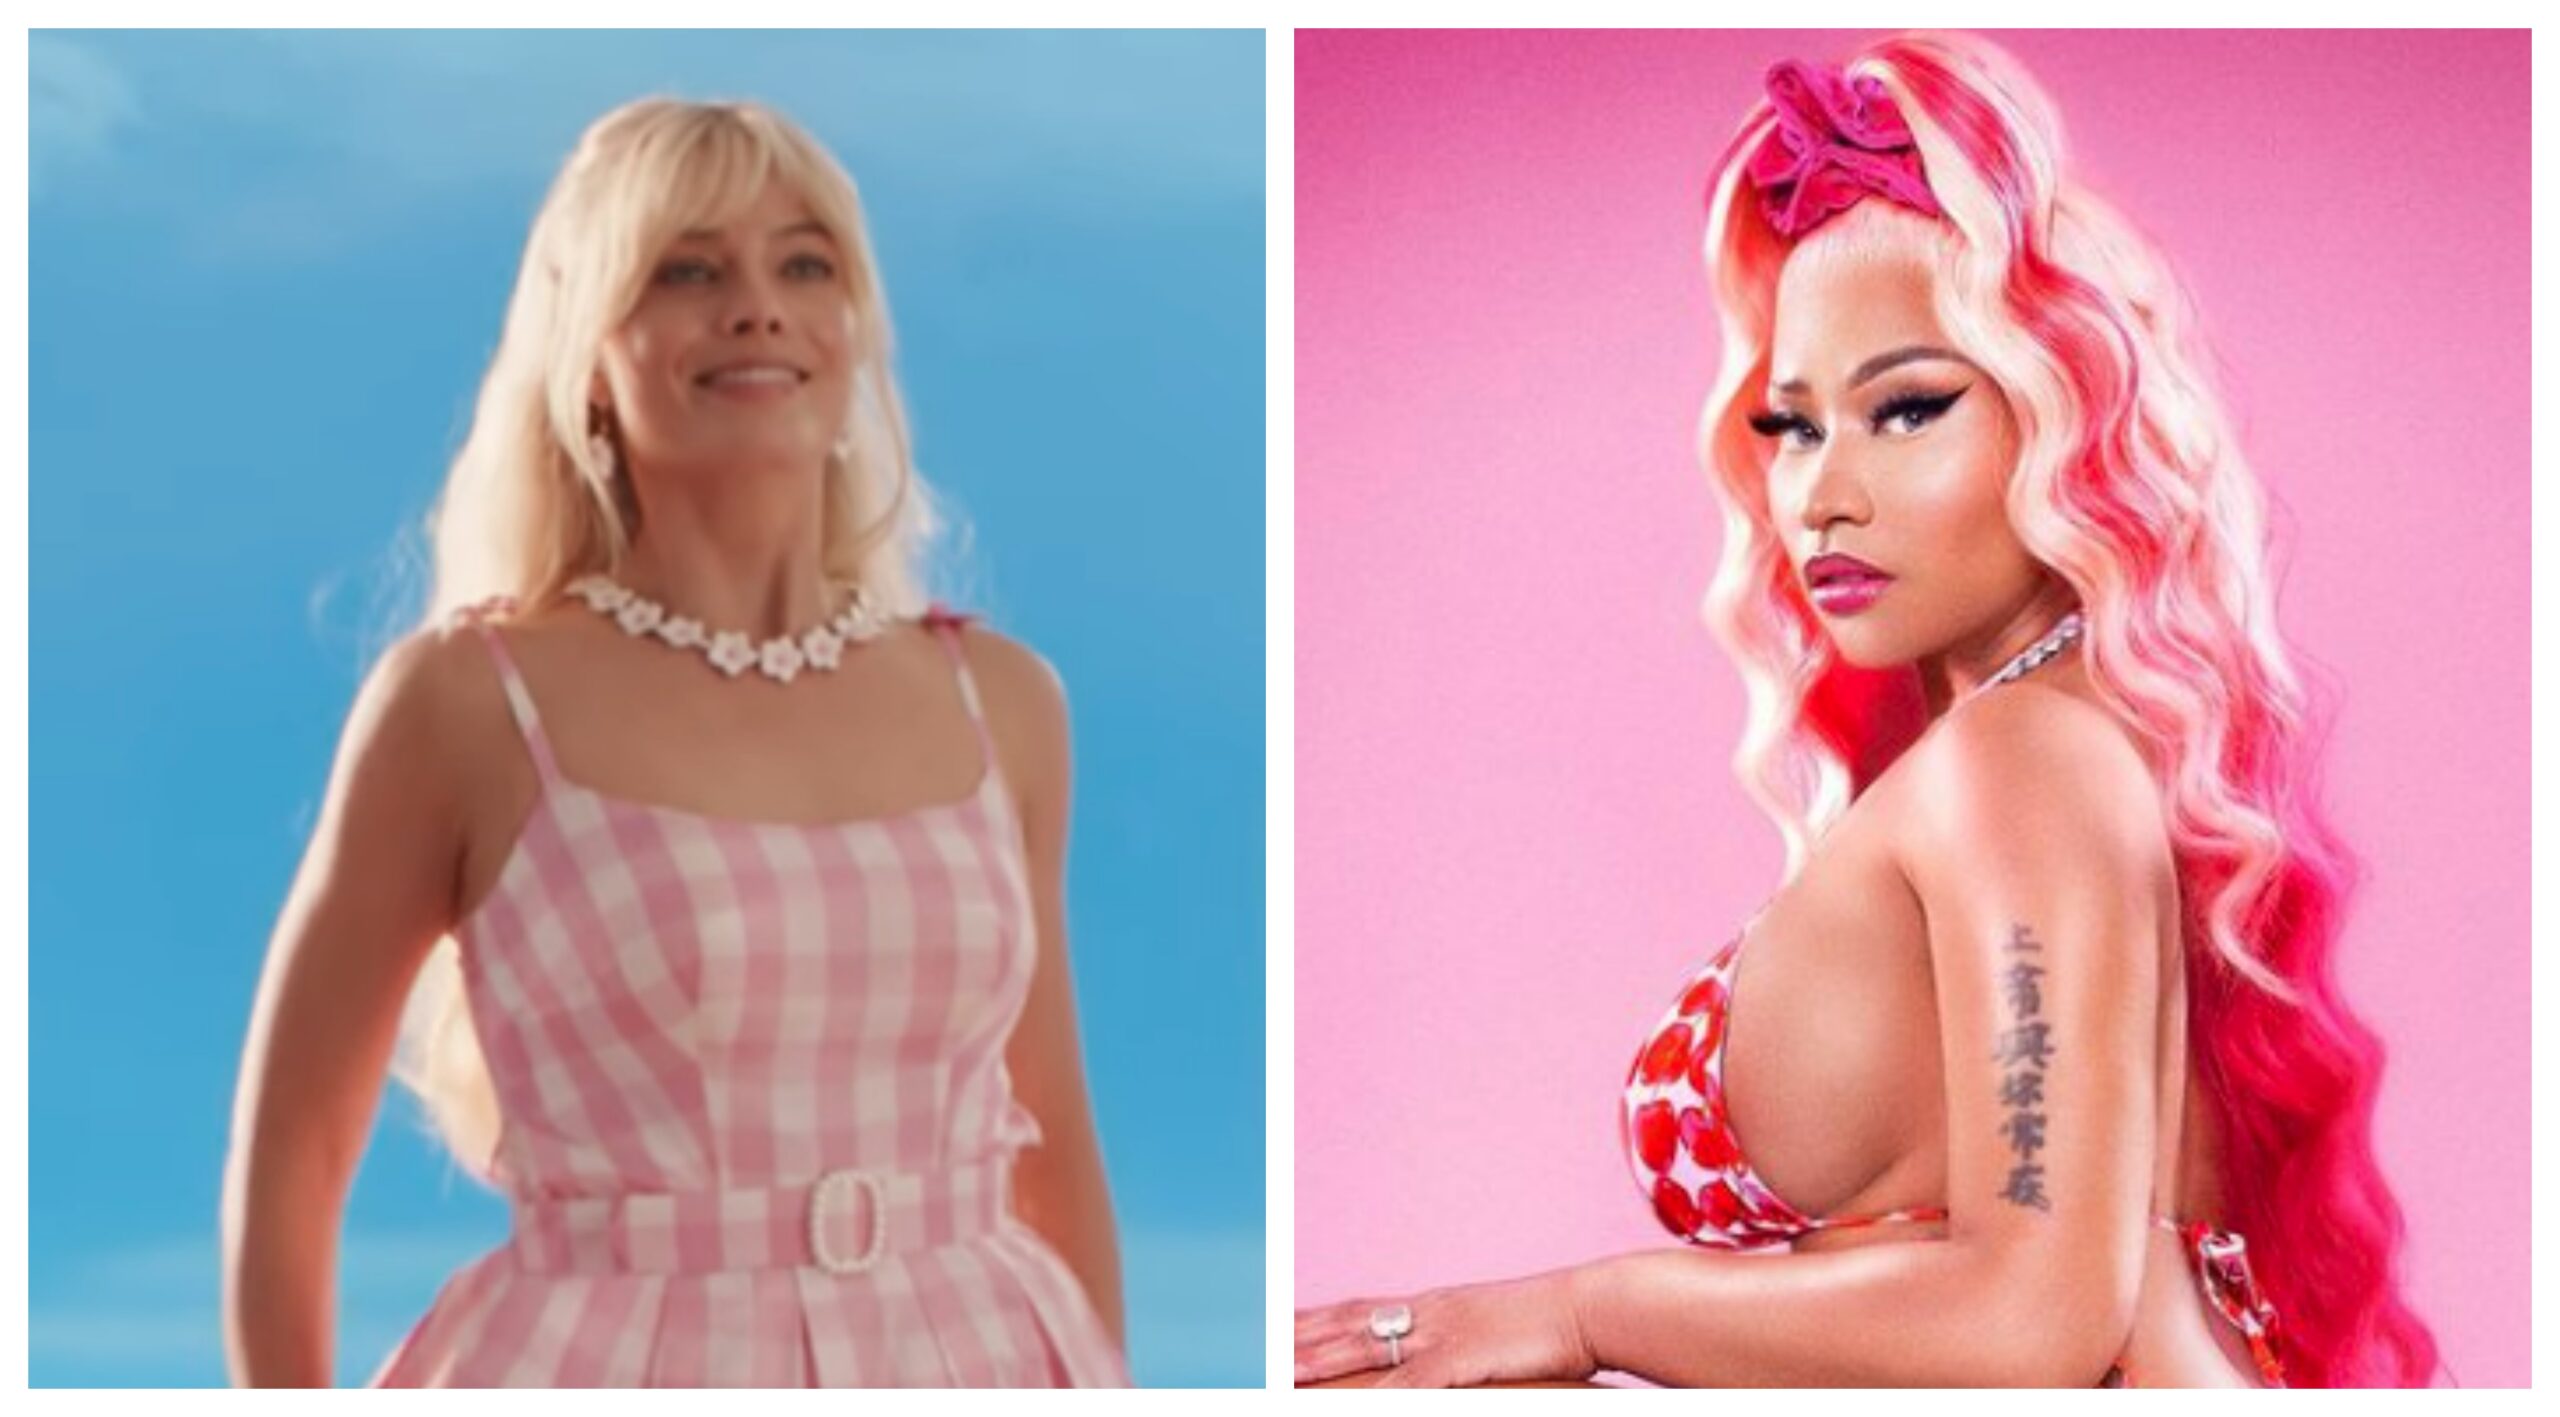 Nicki Minaj And Ice Spice Are Barbie Girls In New Barbie World Music Video